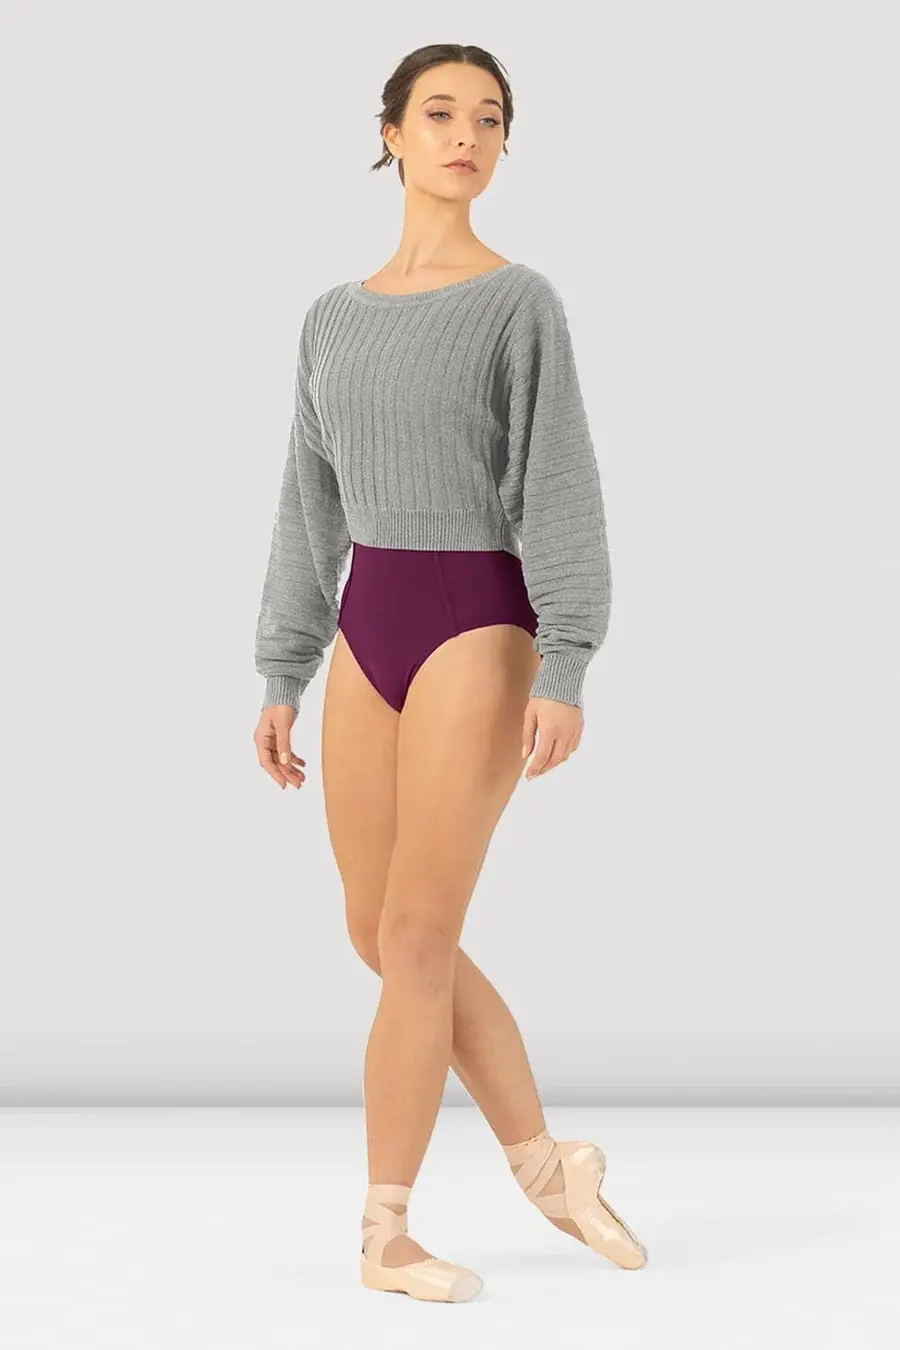 Bloch Ballet Warm-up Sweater, Bloch Z1179